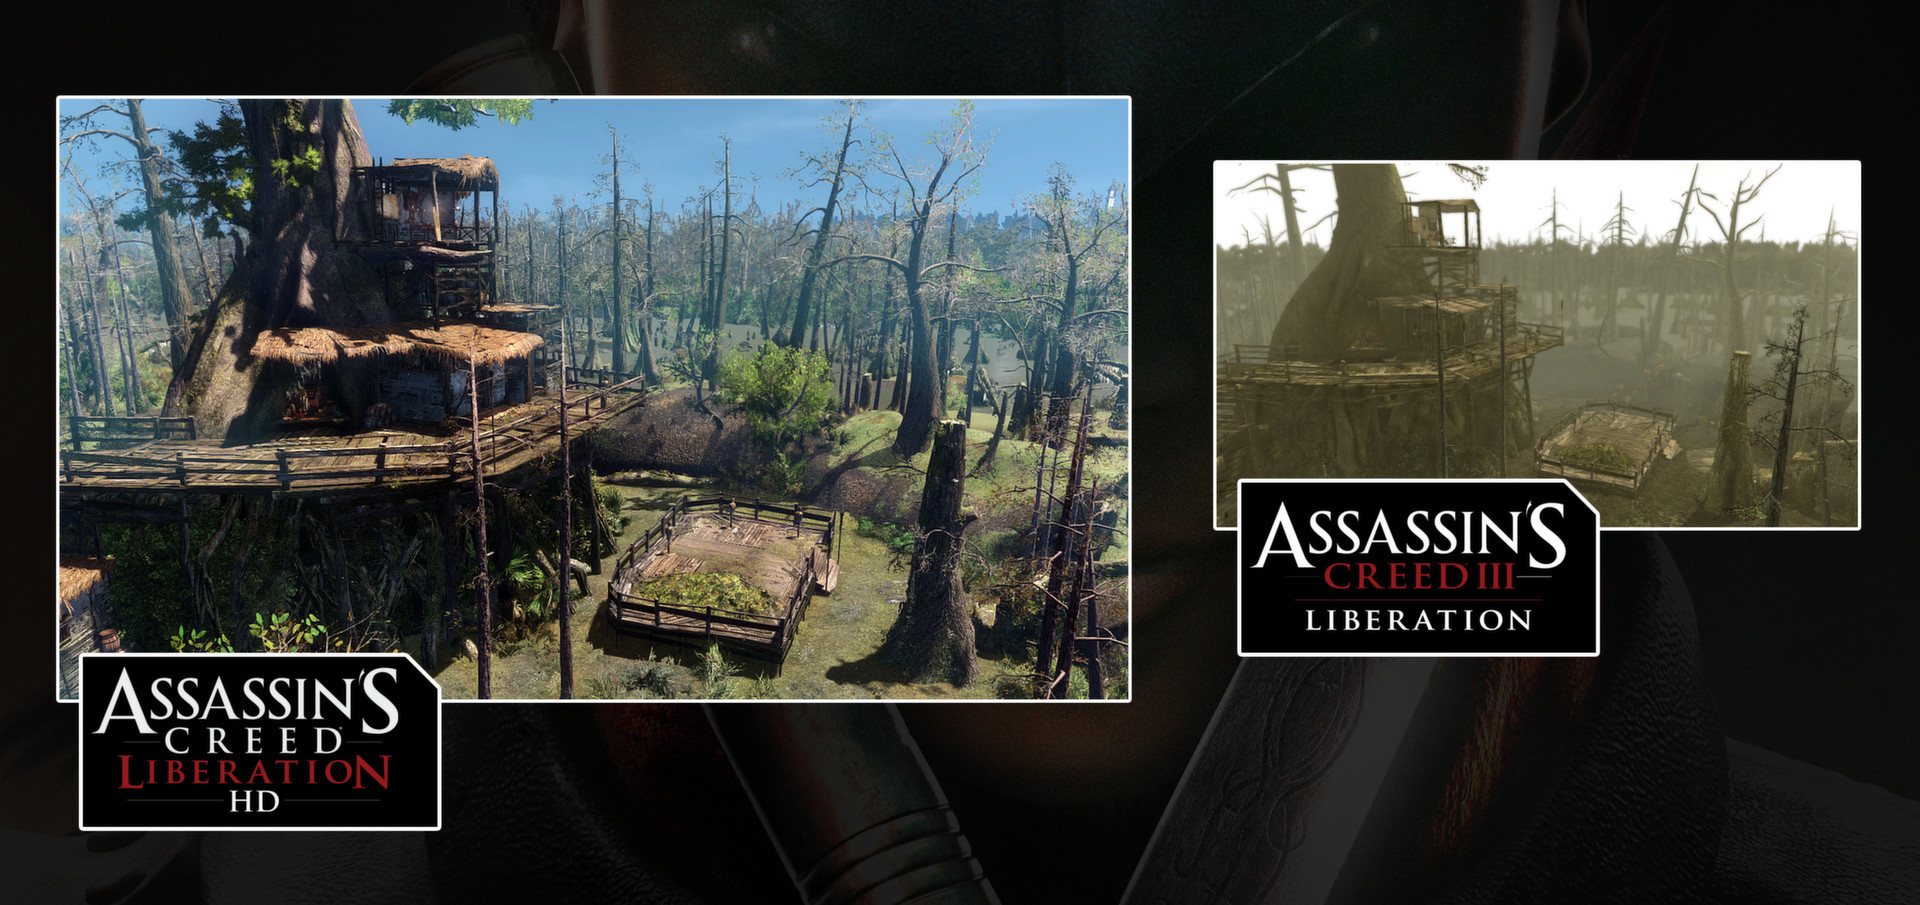 刺客信条 解放（Assassin’s Creed Liberation HD）插图3